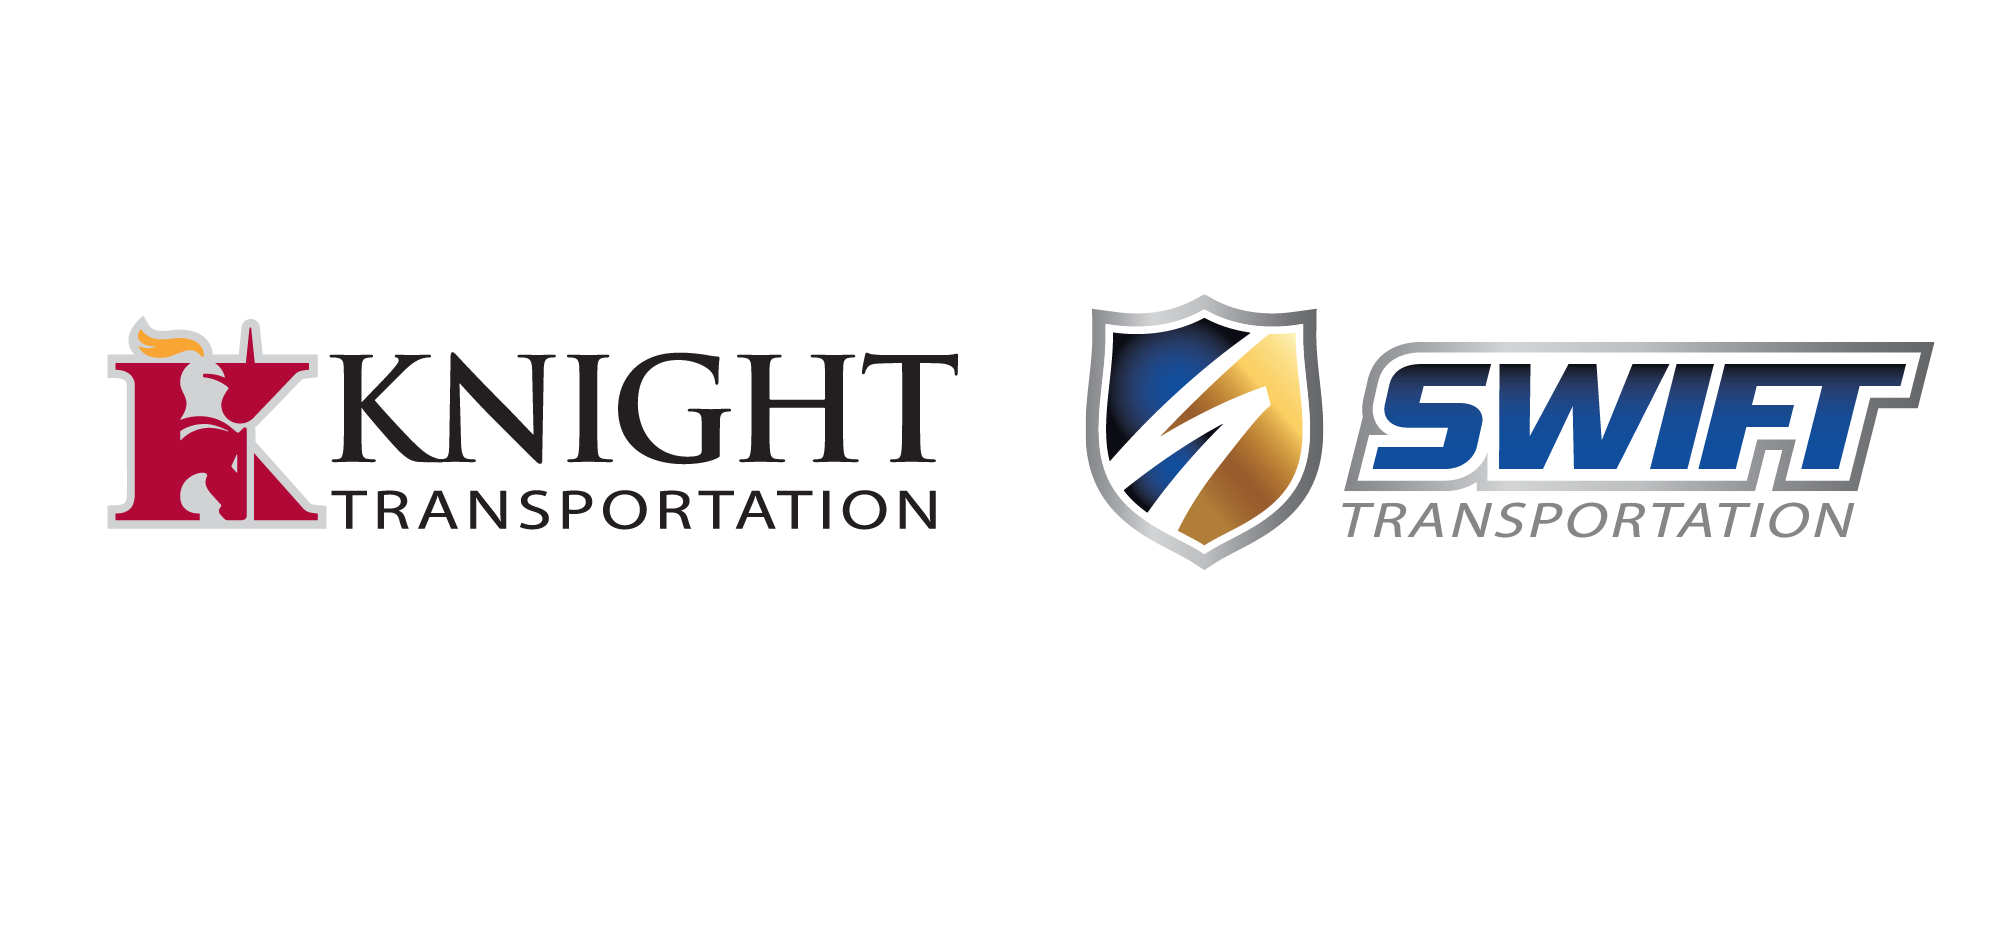 Knight Swift RGB (on light) (1).png